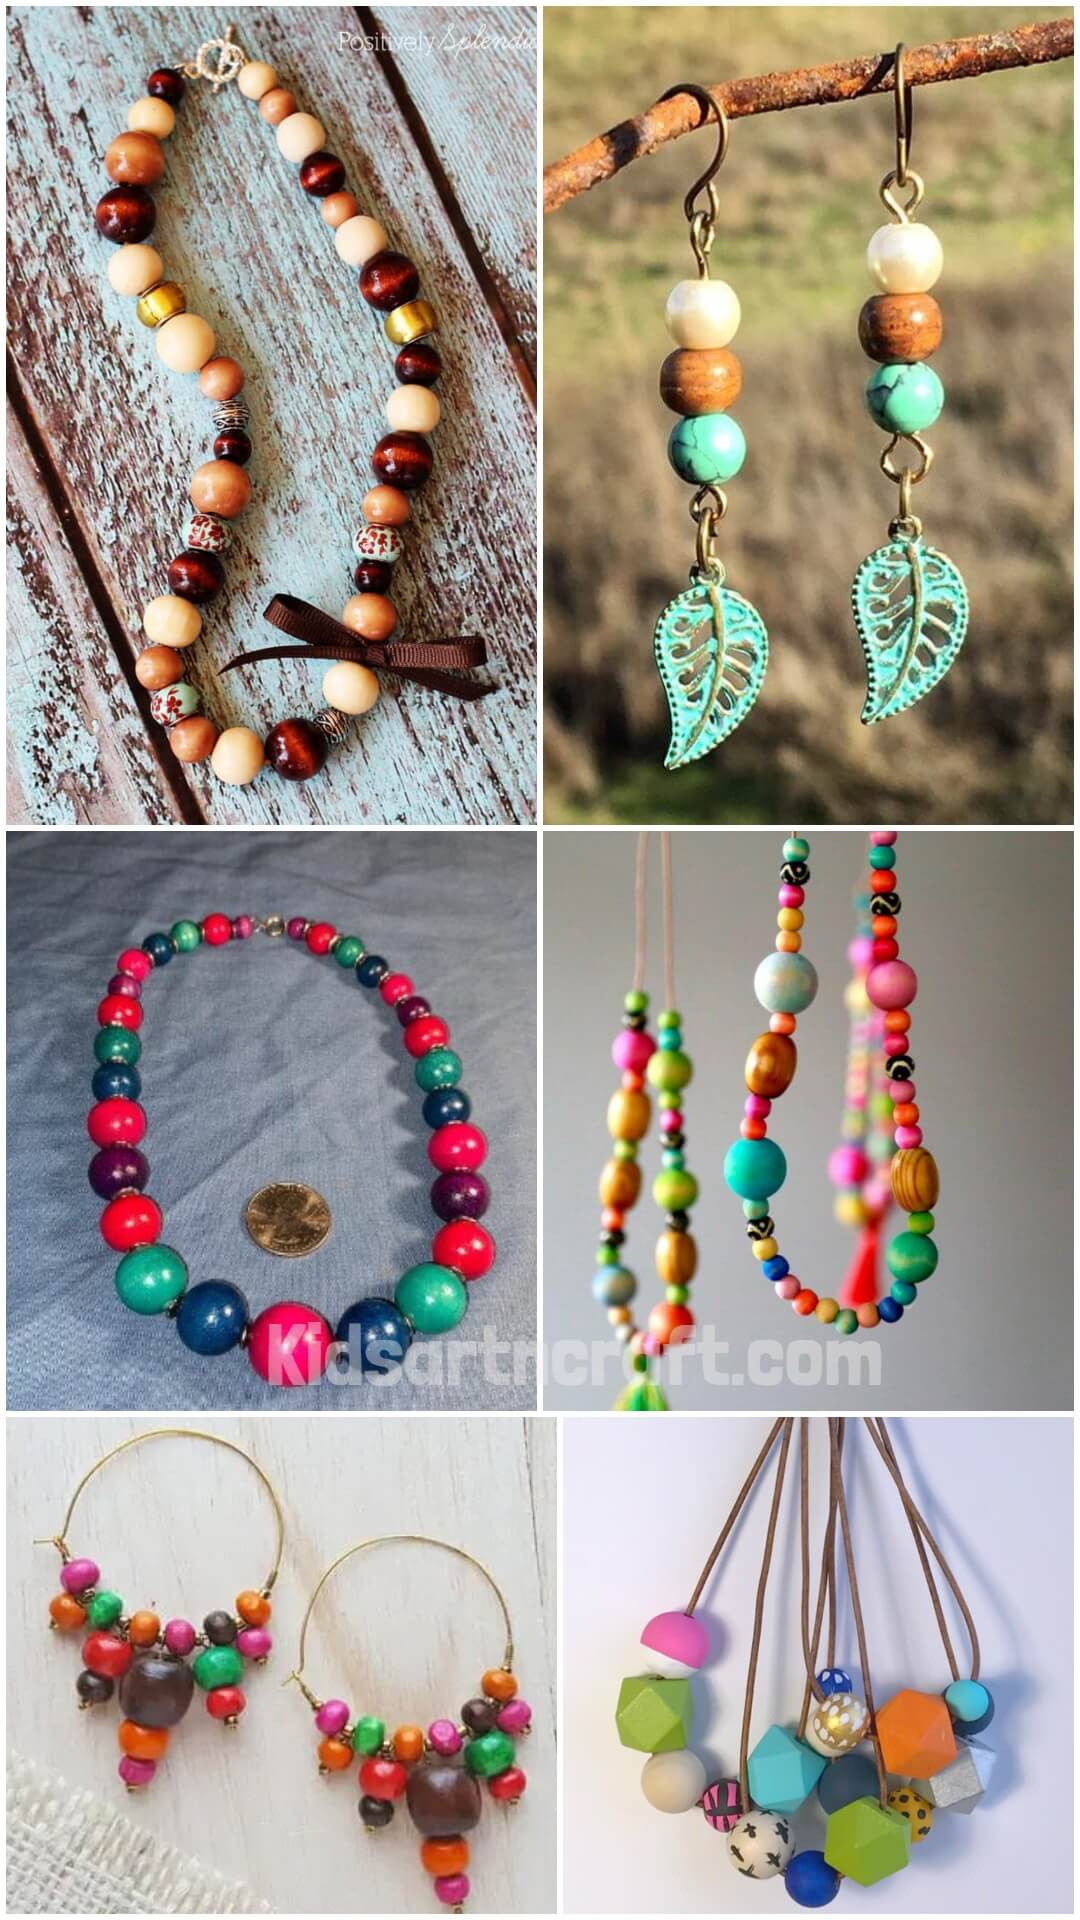 DIY Wooden Bead Jewelry Crafts